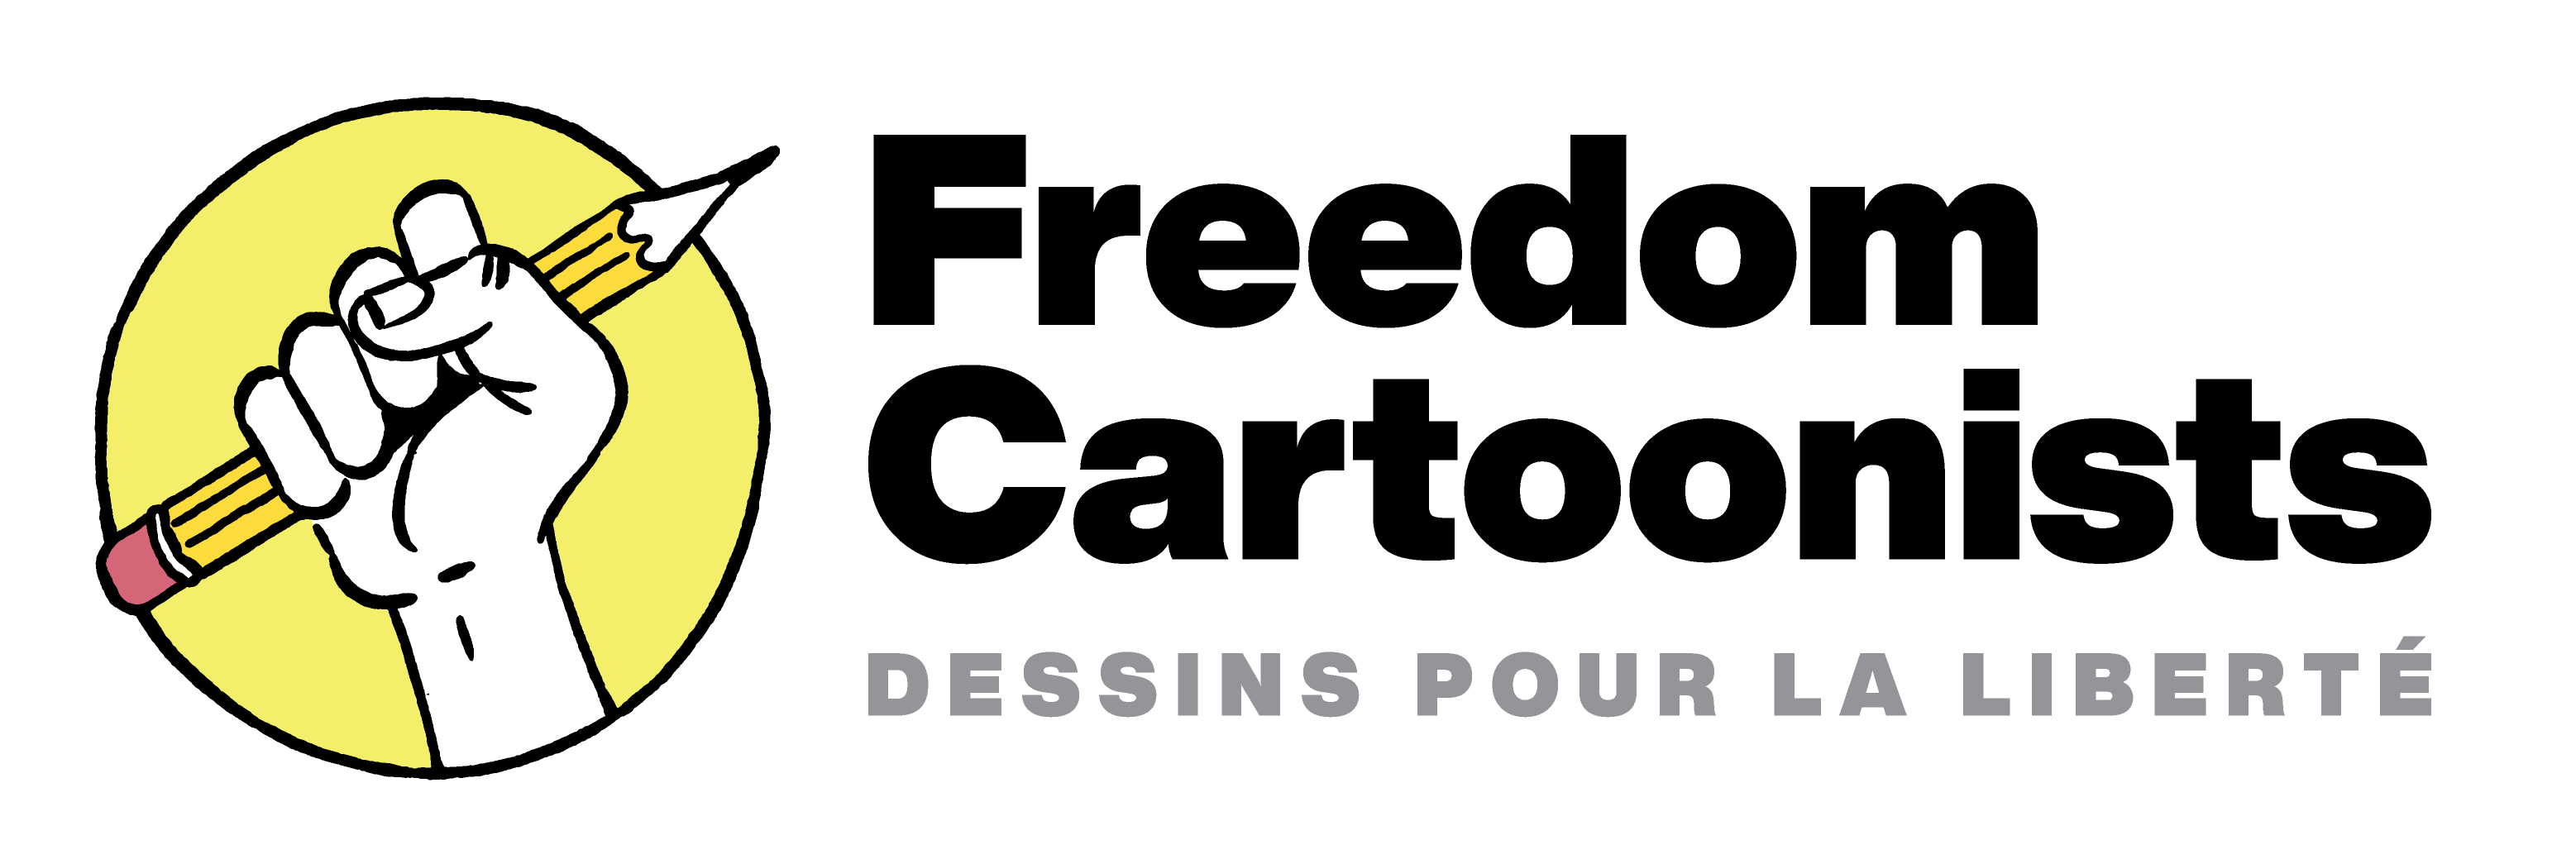 Freedom cartoonists